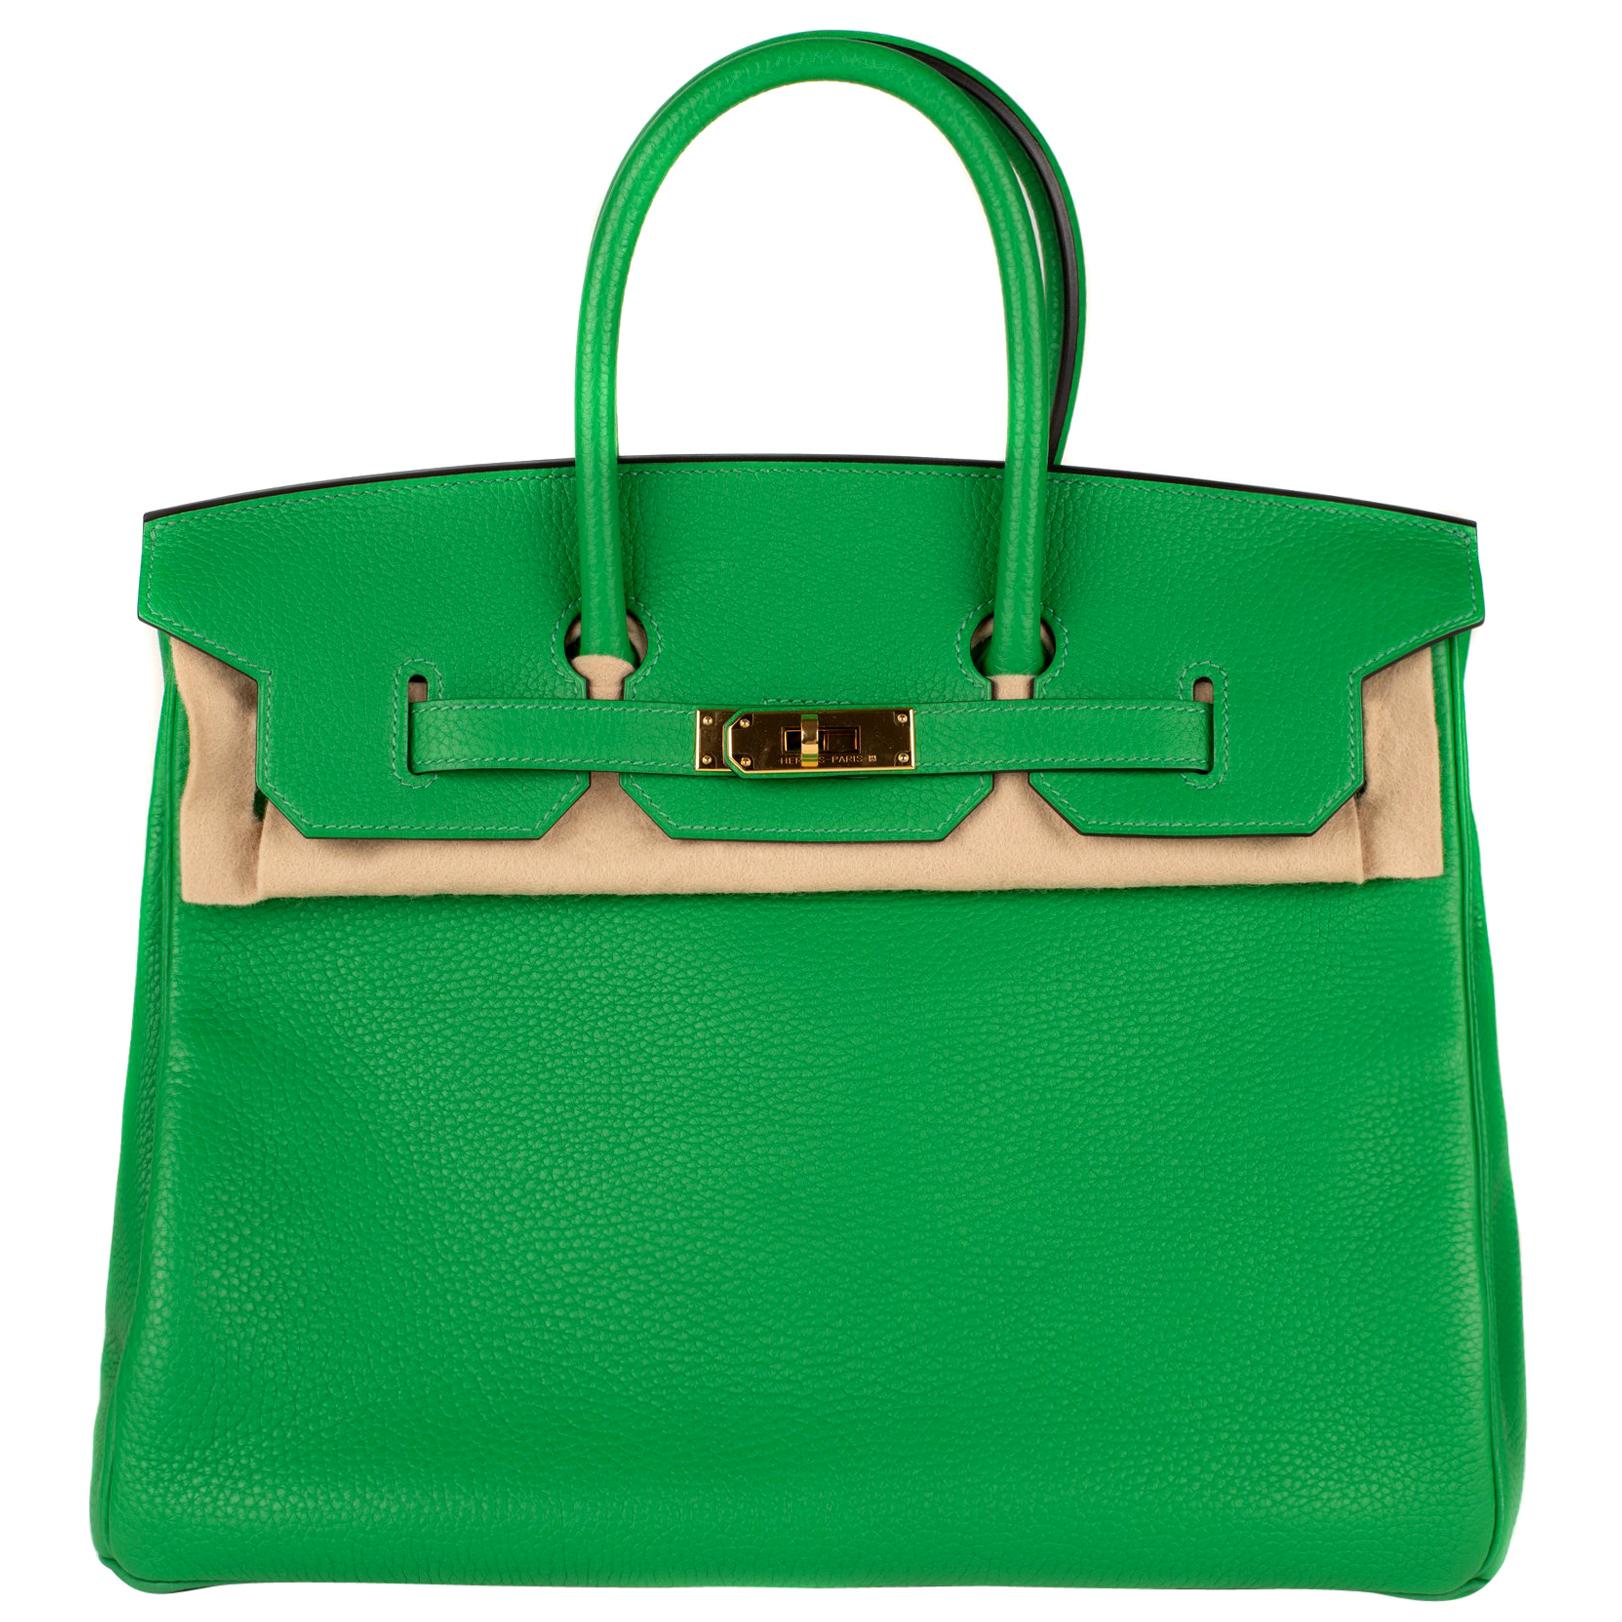 Hermes Birkin35cm Togo Bamboo Green Leather Bag